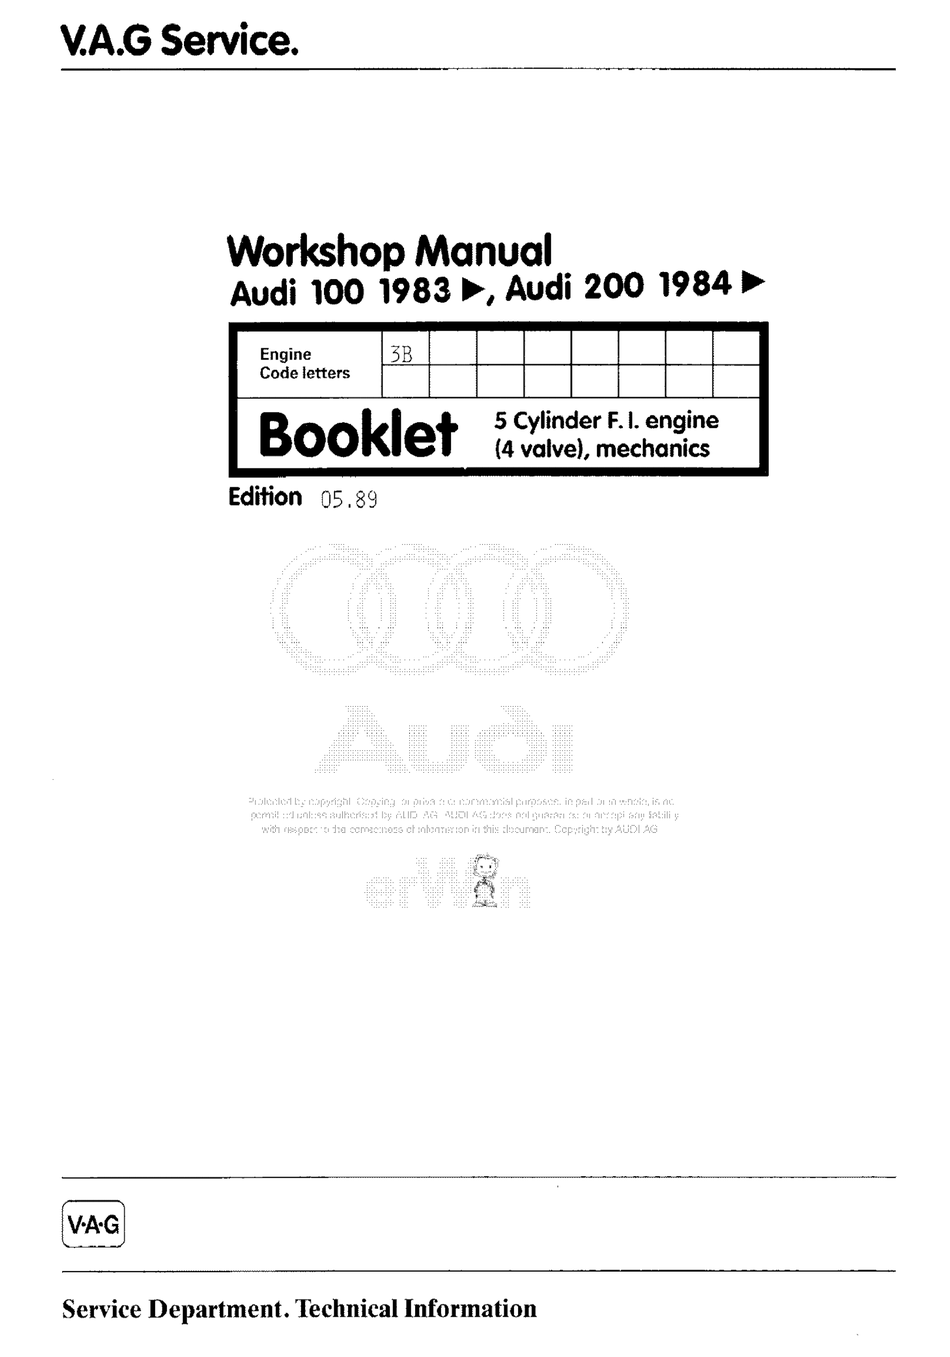 AUDI 100 1983 WORKSHOP MANUAL Pdf Download | ManualsLib